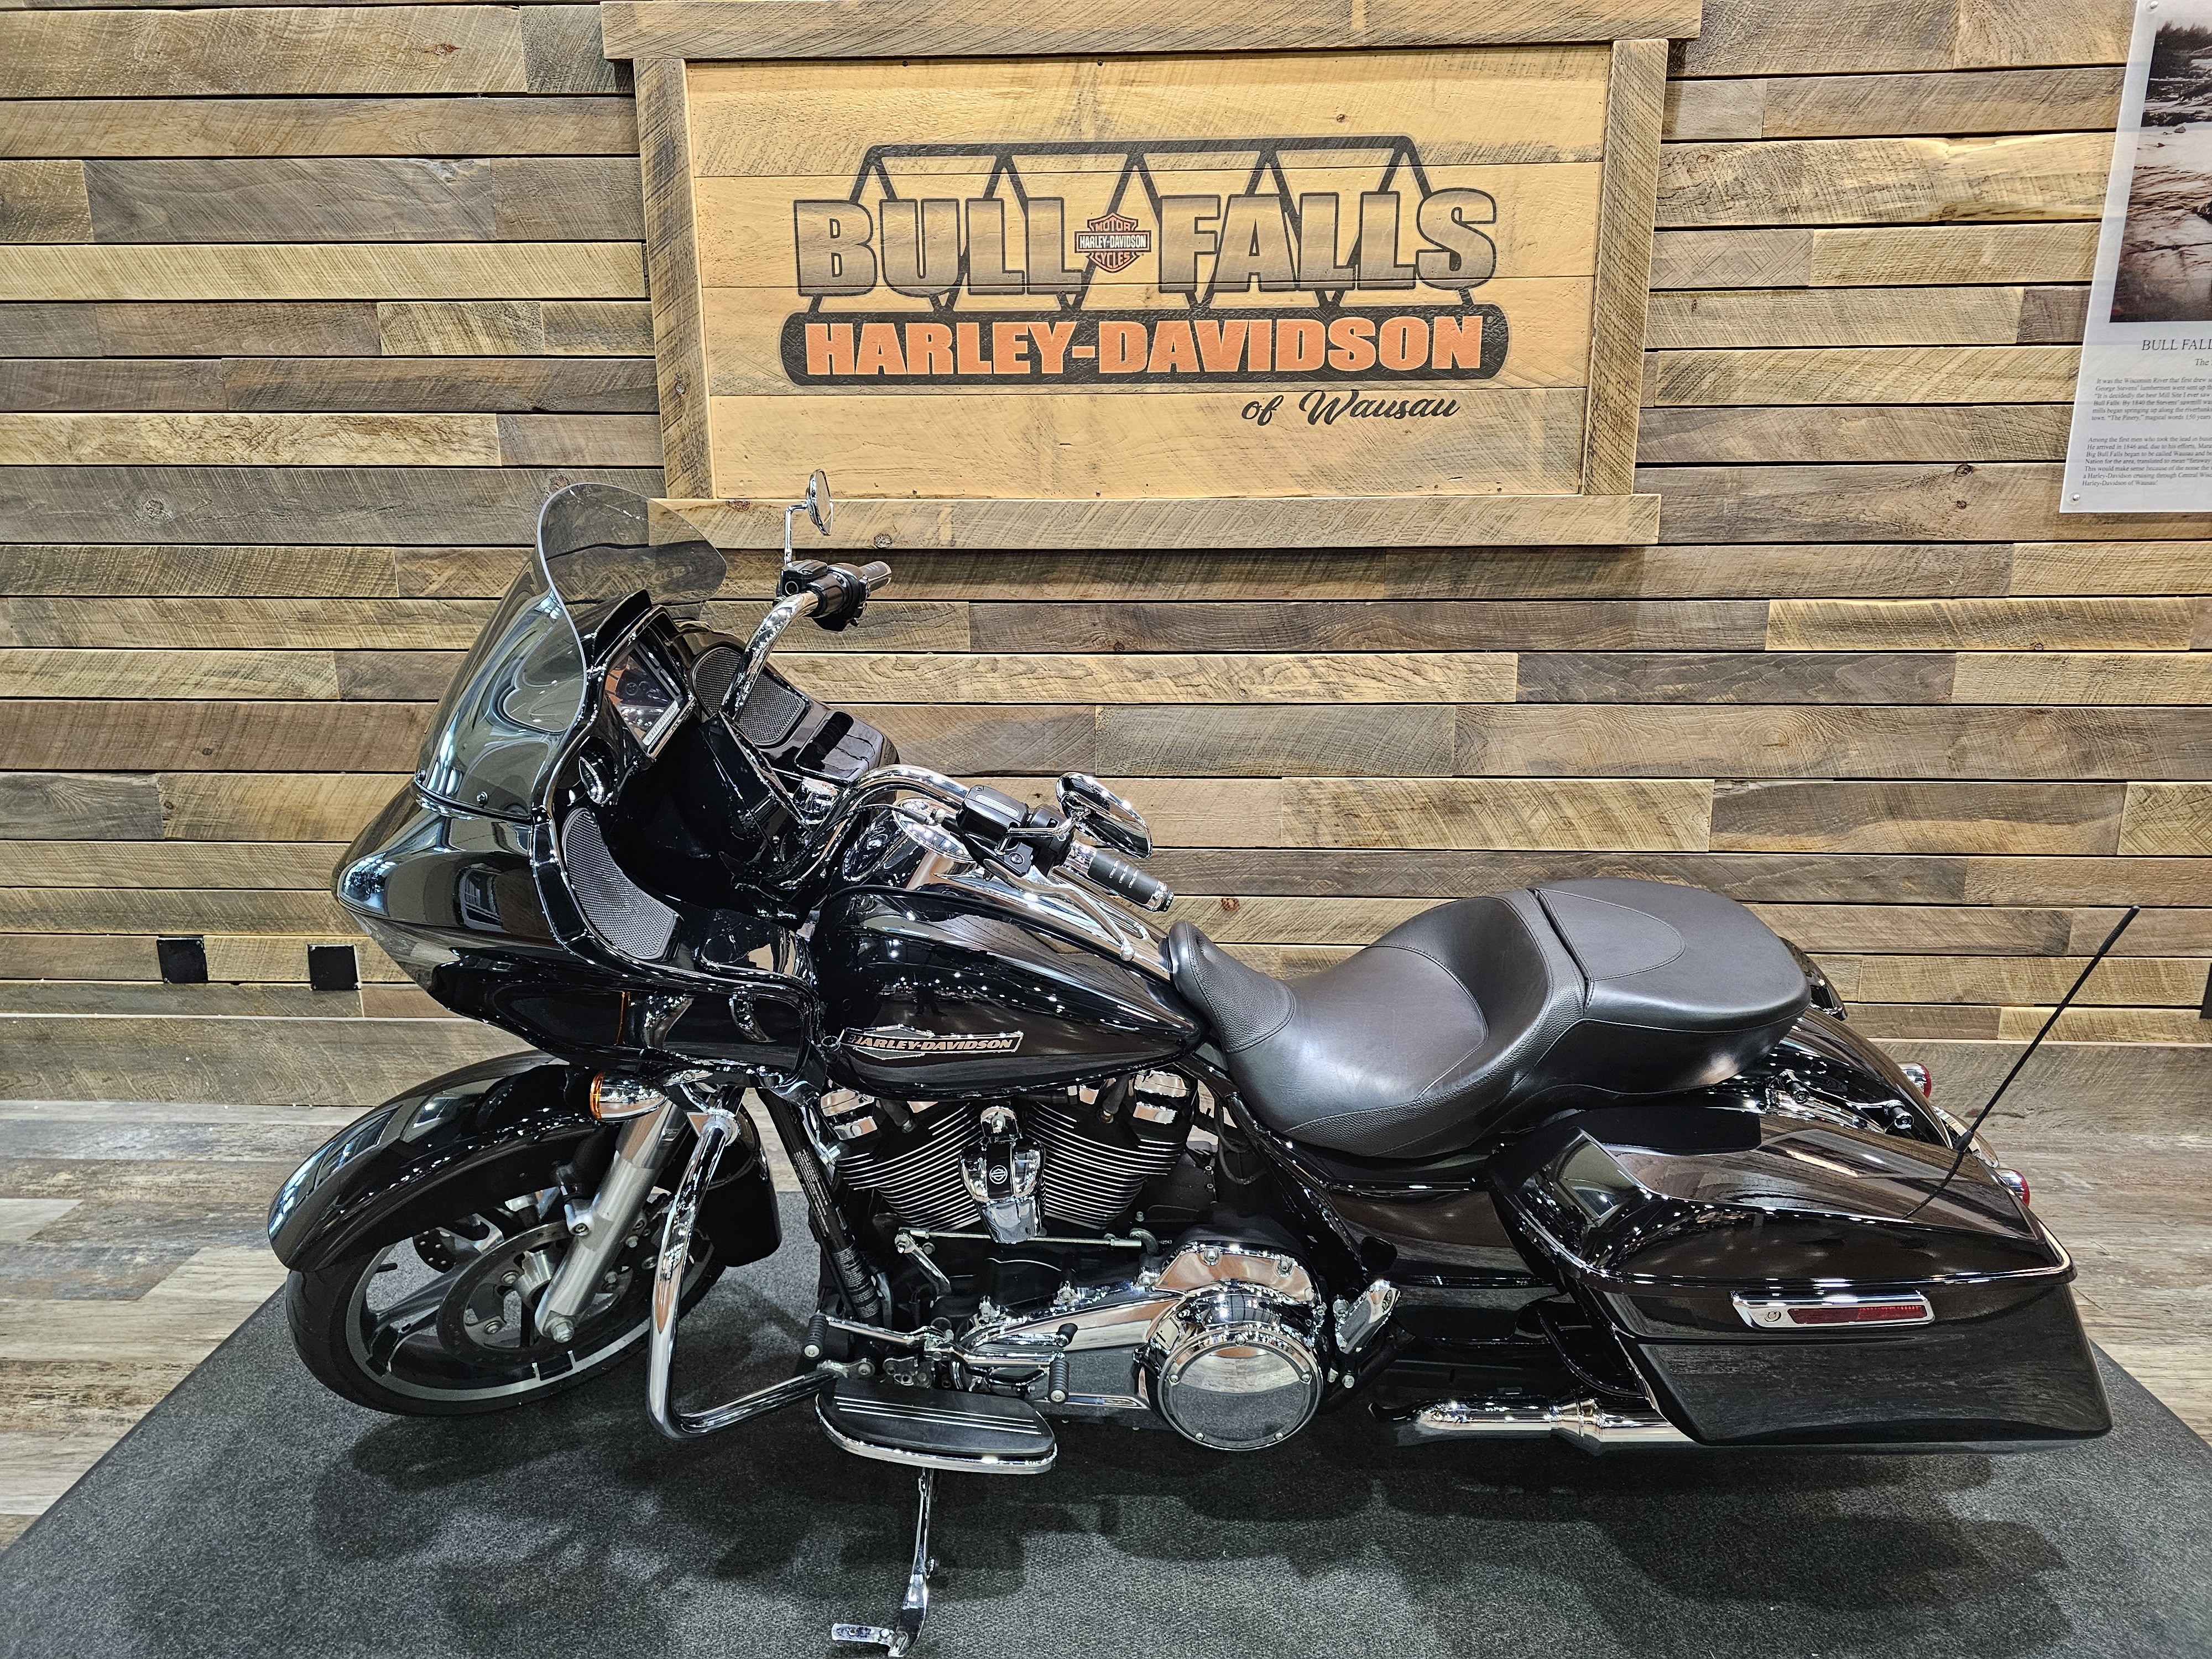 2017 Harley-Davidson Road Glide Special at Bull Falls Harley-Davidson